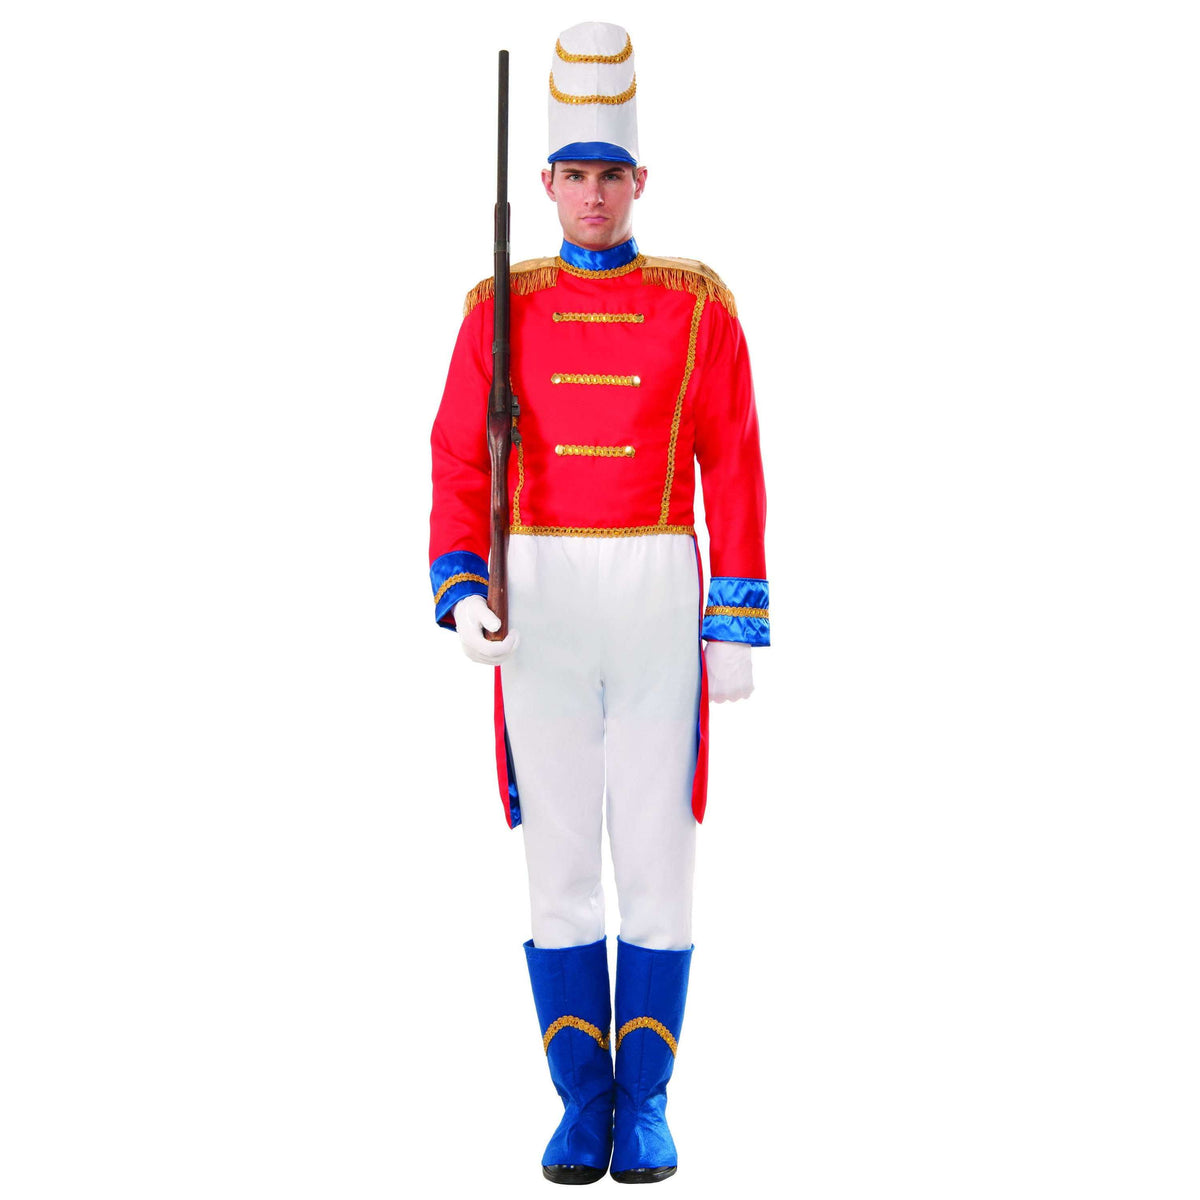 Toy Soldier Men's Costume